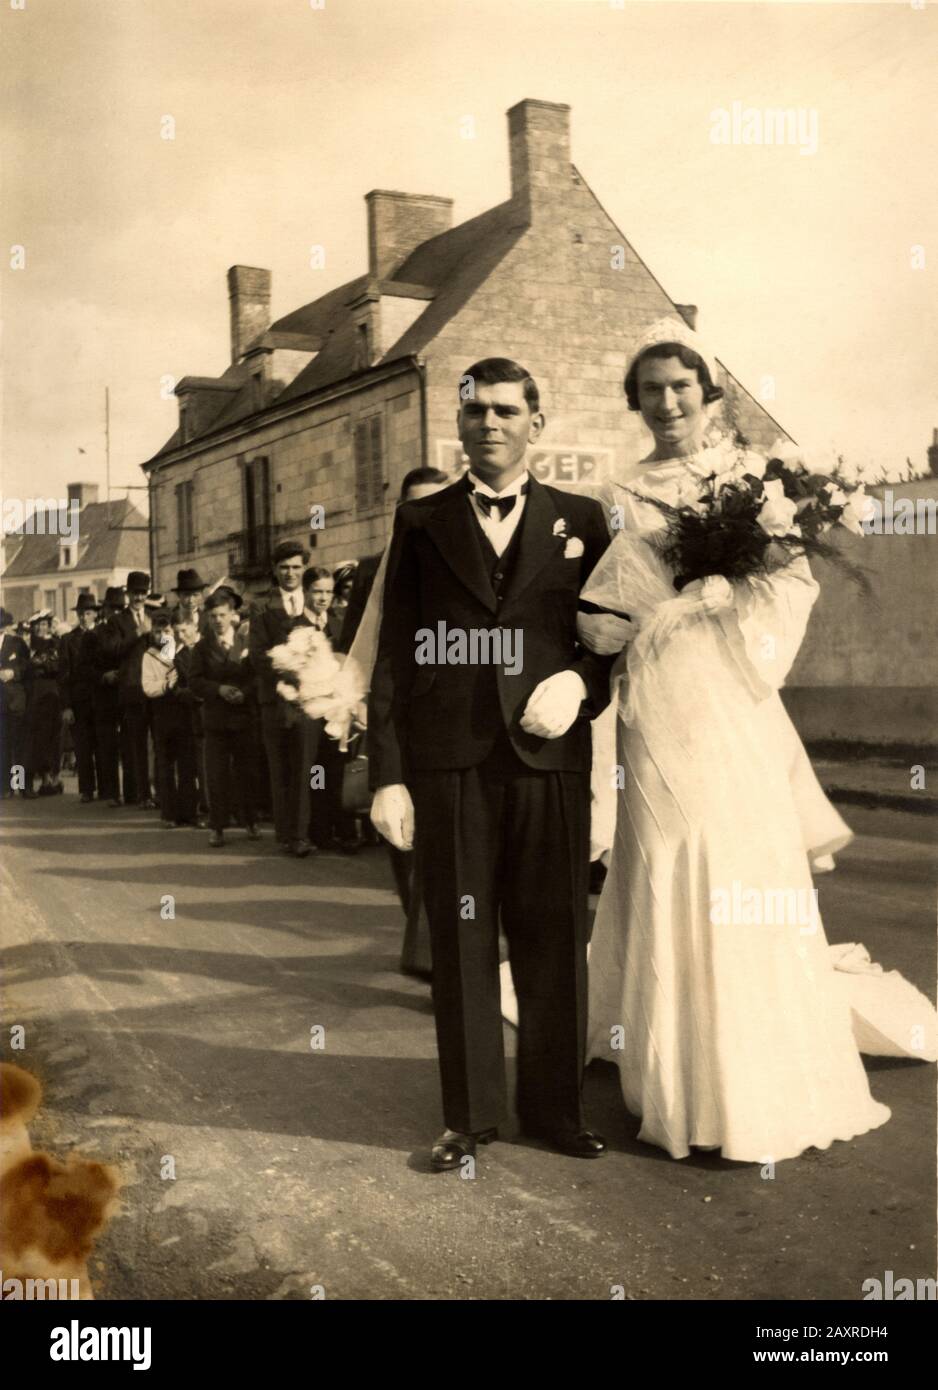 1940 Ca, SAUMUR, Maine-et-Loire, FRANKREICH: EINE Hochzeitsfeier, die nach der religiösen Zeremonie der Kirche in die Straße eindeichte. Foto von Studio Jean Decker, Saumur . - NOZZE - abito bianco da SPOSA - SPOSI - SPOSO - Handschuhe - Guanti - Blumen - fiori - Mazzo di Rose - Corteo in strada per la via - invitrati - ricevimento - MARITO E MOGLIE - HOCHZEITSKLEIDPARTY - BRIDE - Cerimonia - FOTO STORICHE - HISTORIENFOTOS - XX JAHRHUNDERT - NOVECENTO - Thulle - Tülle - Strascico - FAMIGLIA - FAMILIE - PARTI - festa - ricevimento - velo - Schleier - Blumen - fiori - fiore - Lächeln - sorriso - ARCHIVIO GBB Stockfoto